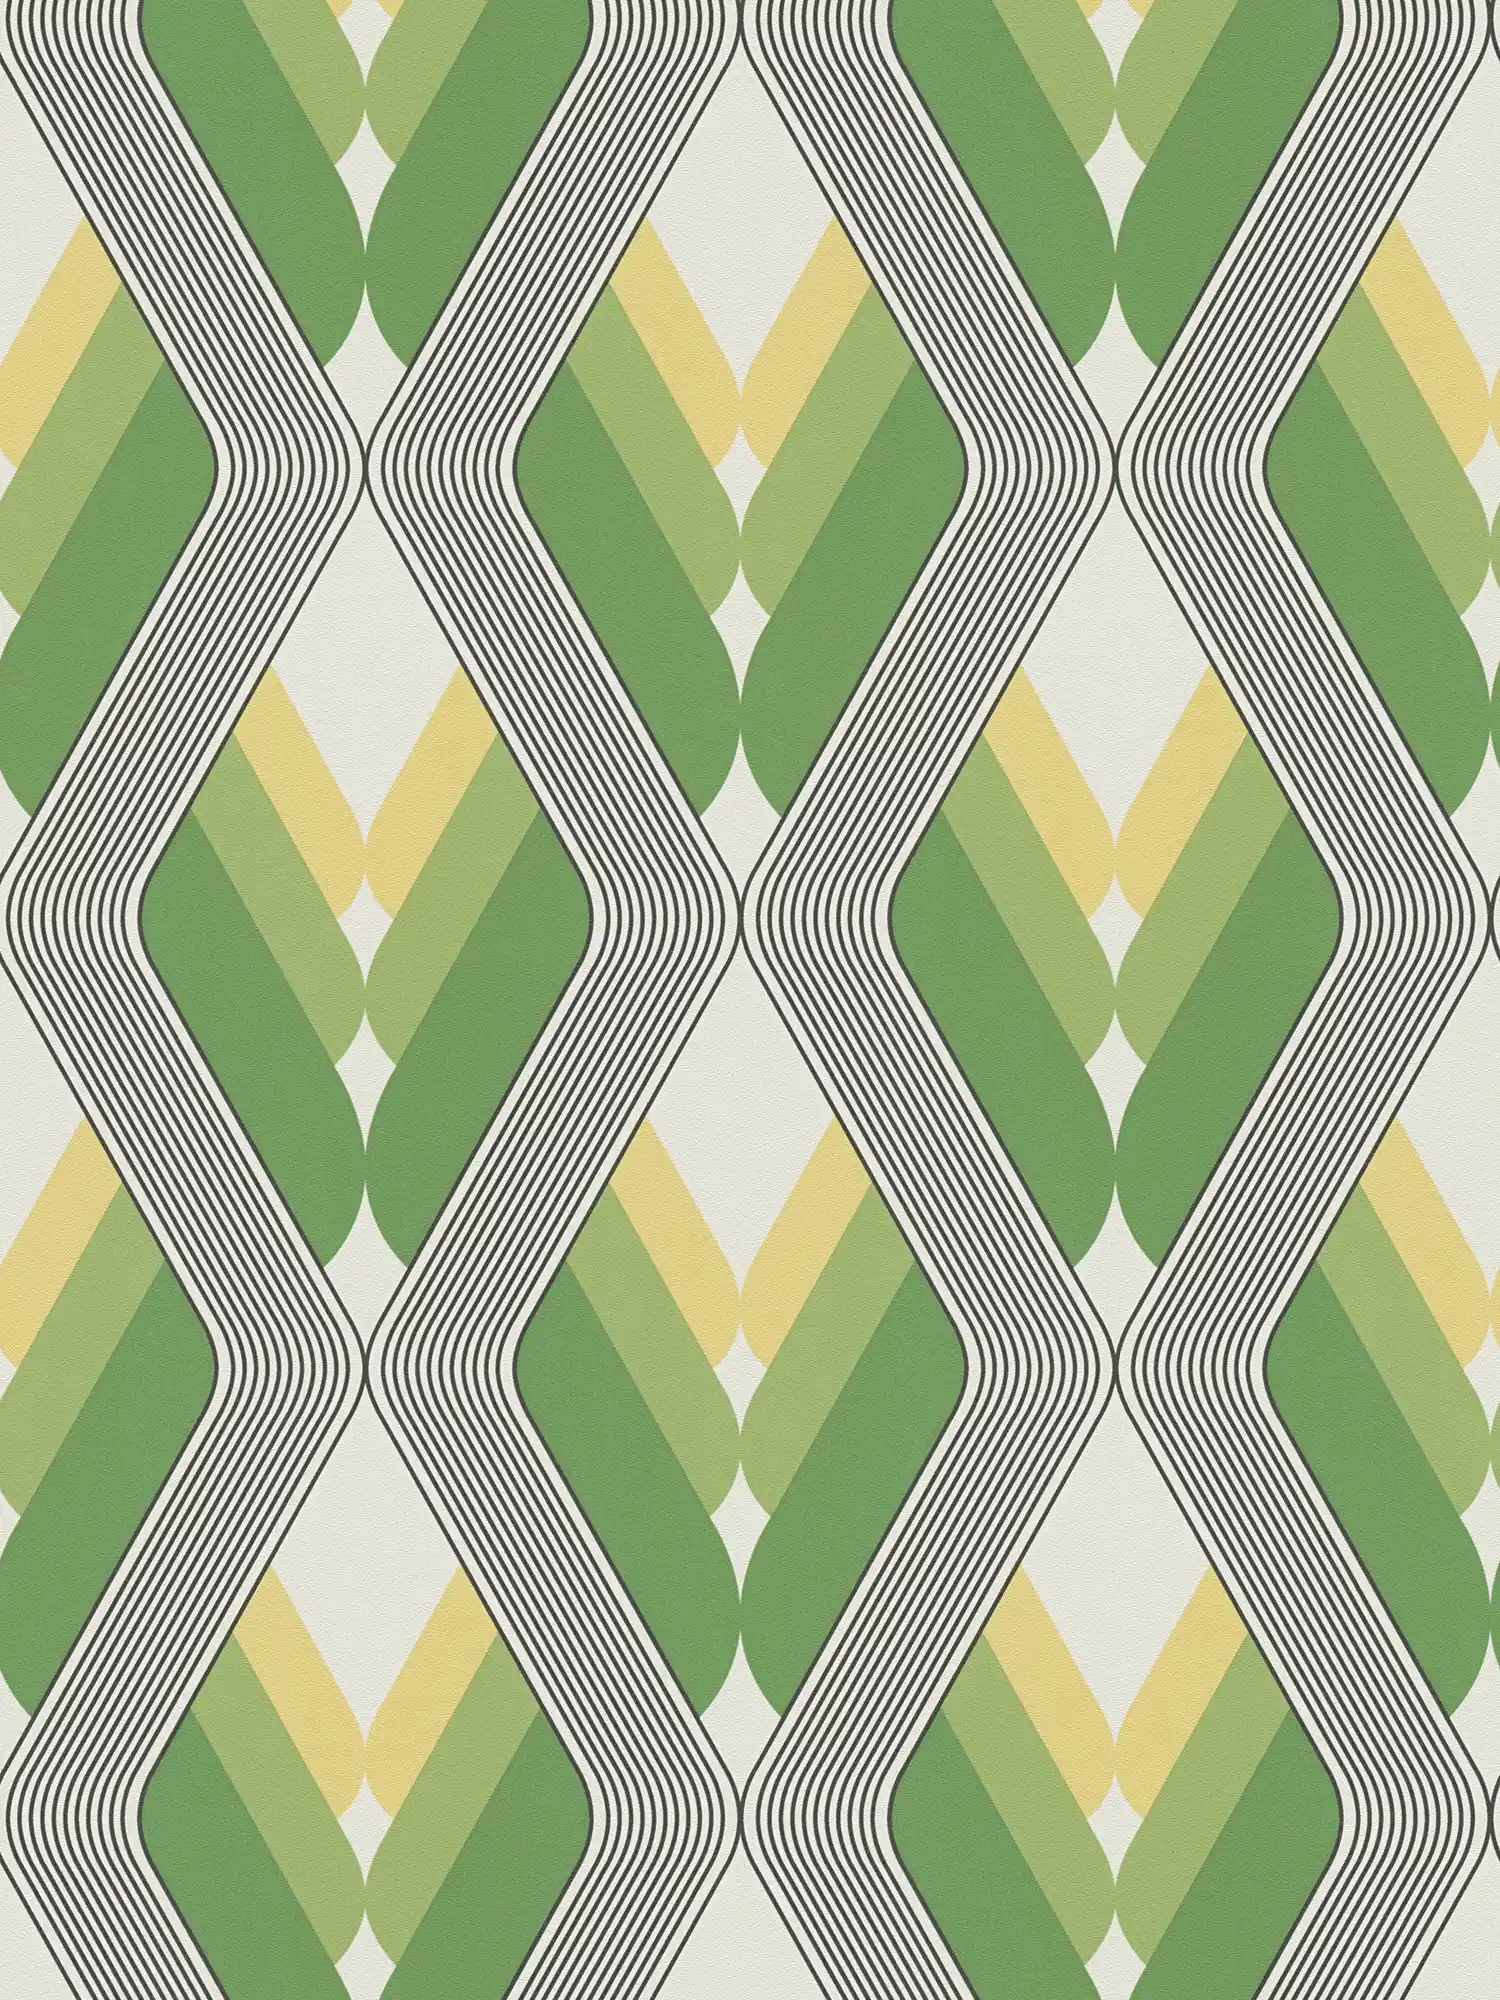         Graphic wallpaper 70s design - green, white, black
    